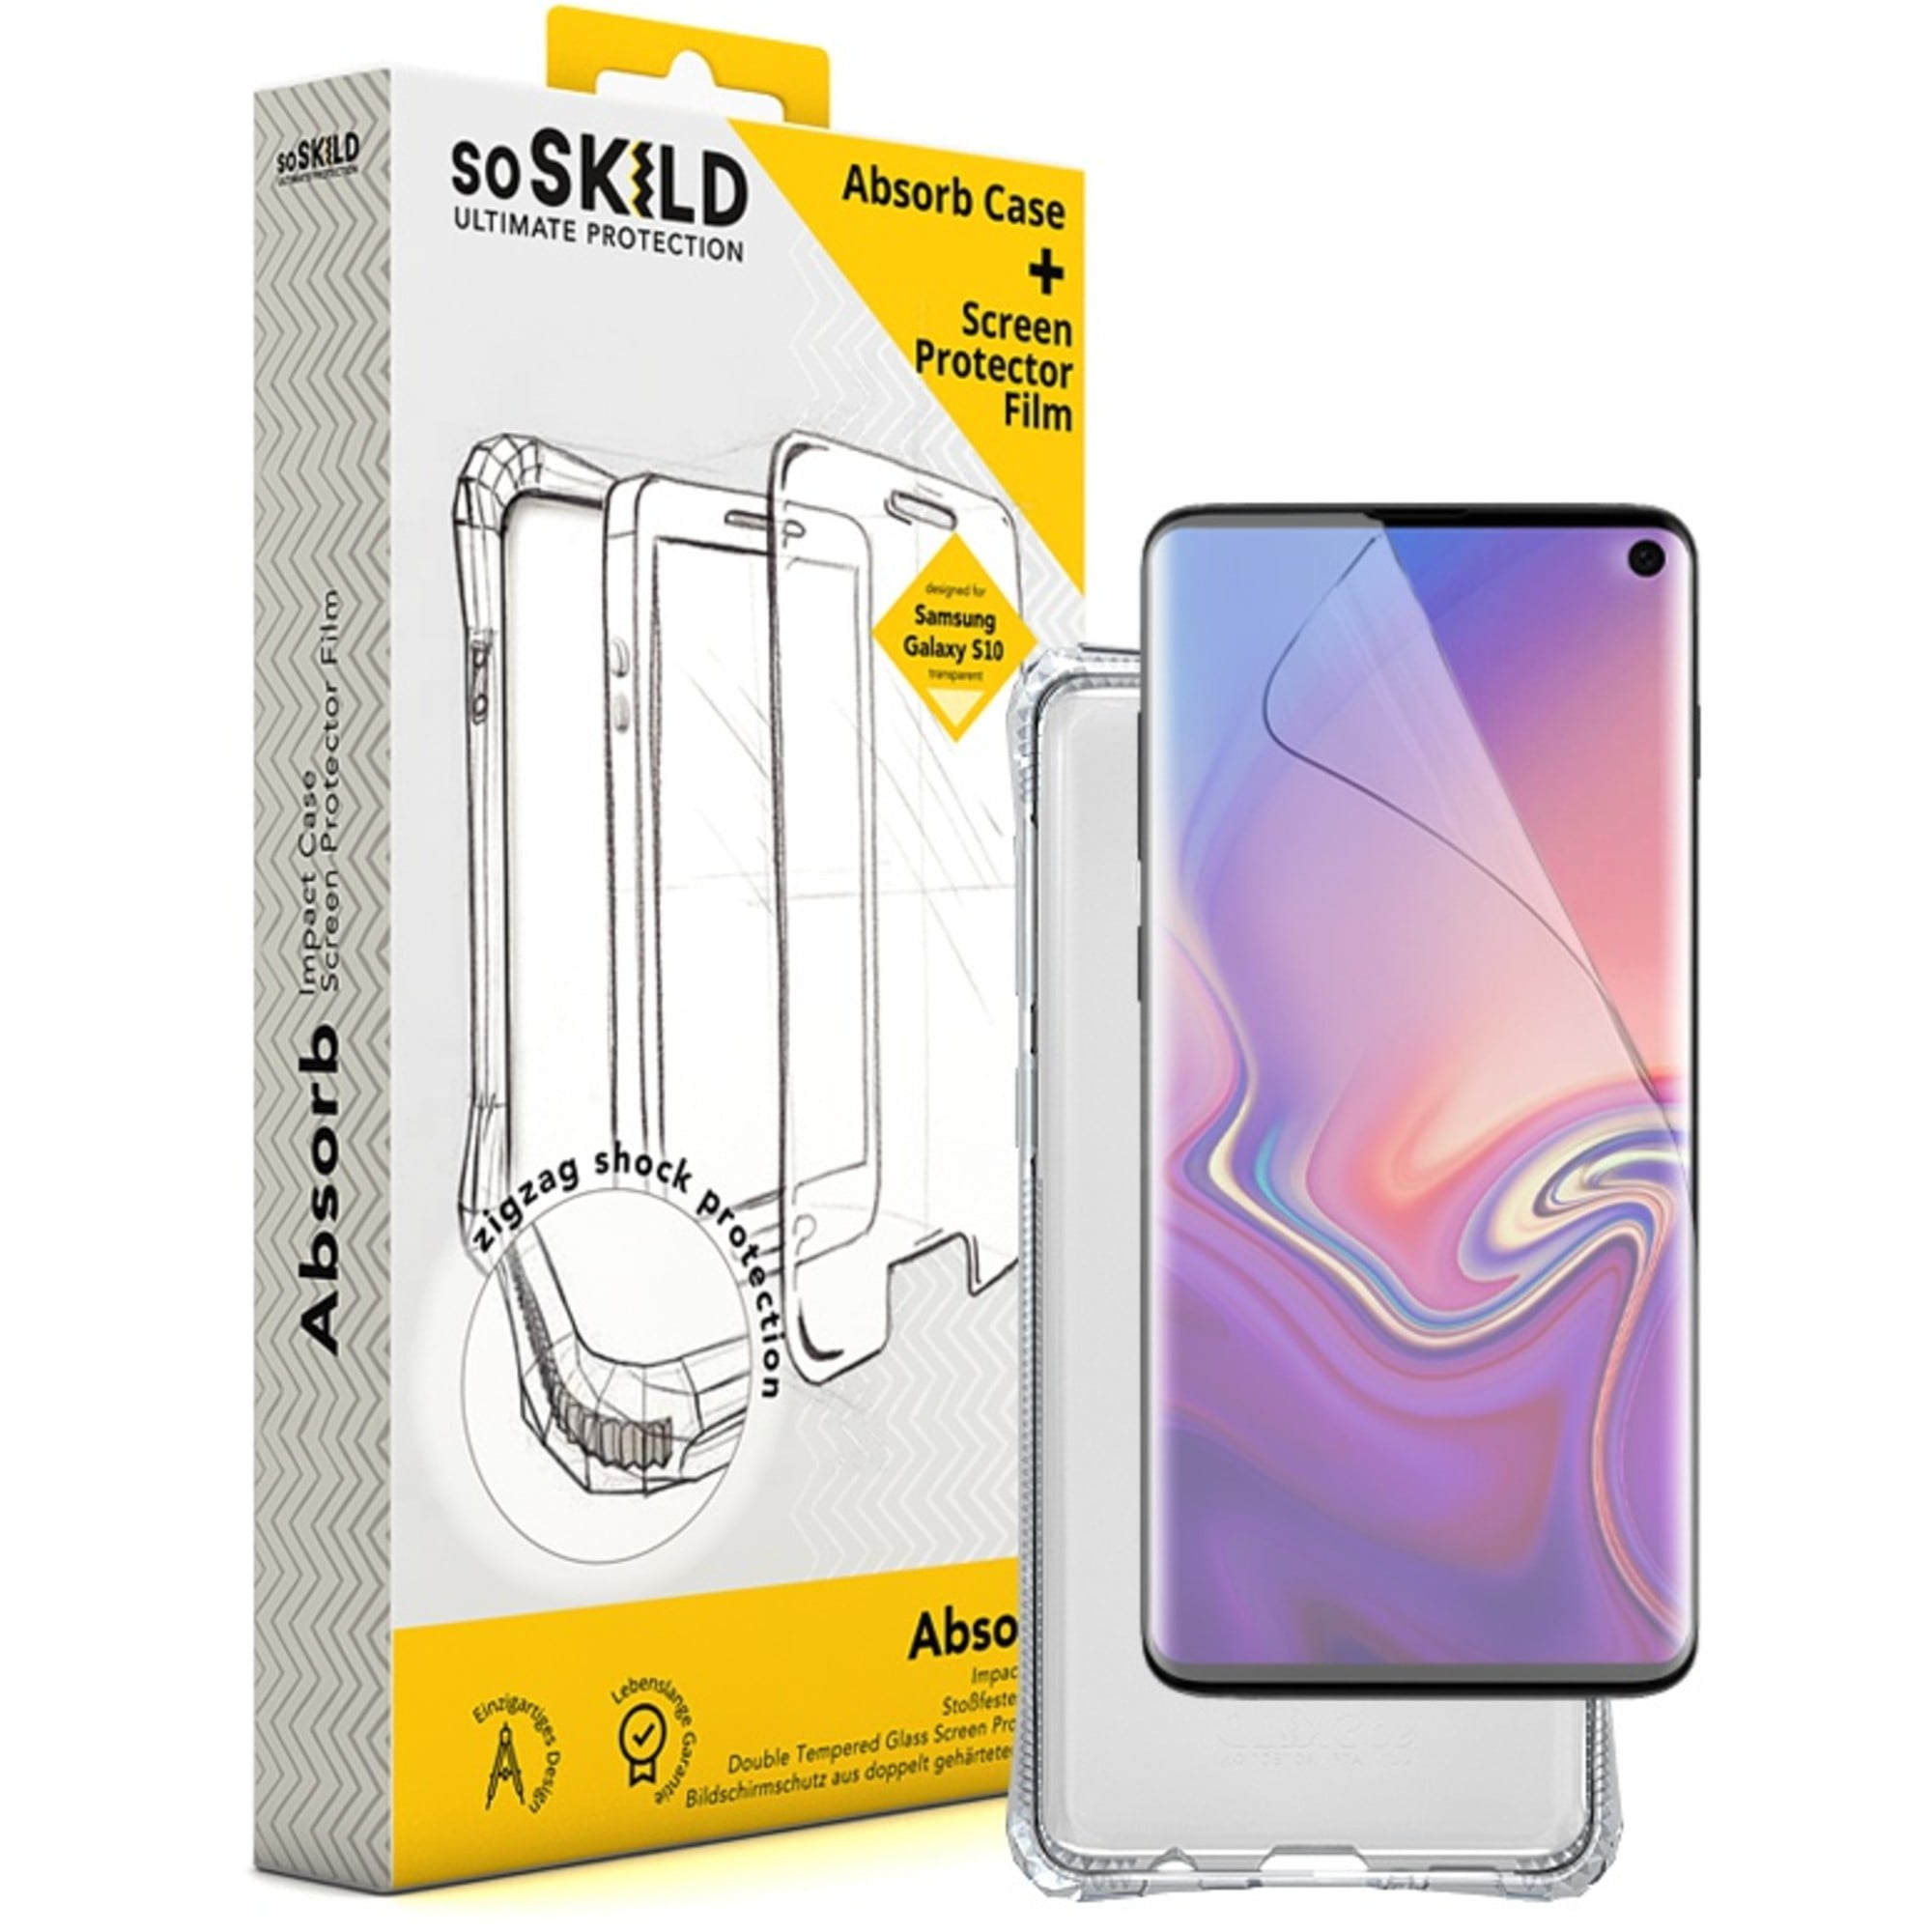 SOSKILD Mobile Case Absorb 2.0 Impact Case for Samsung Galaxy S10 Screen Protector - Transparent - Walmart.com - Walmart.com